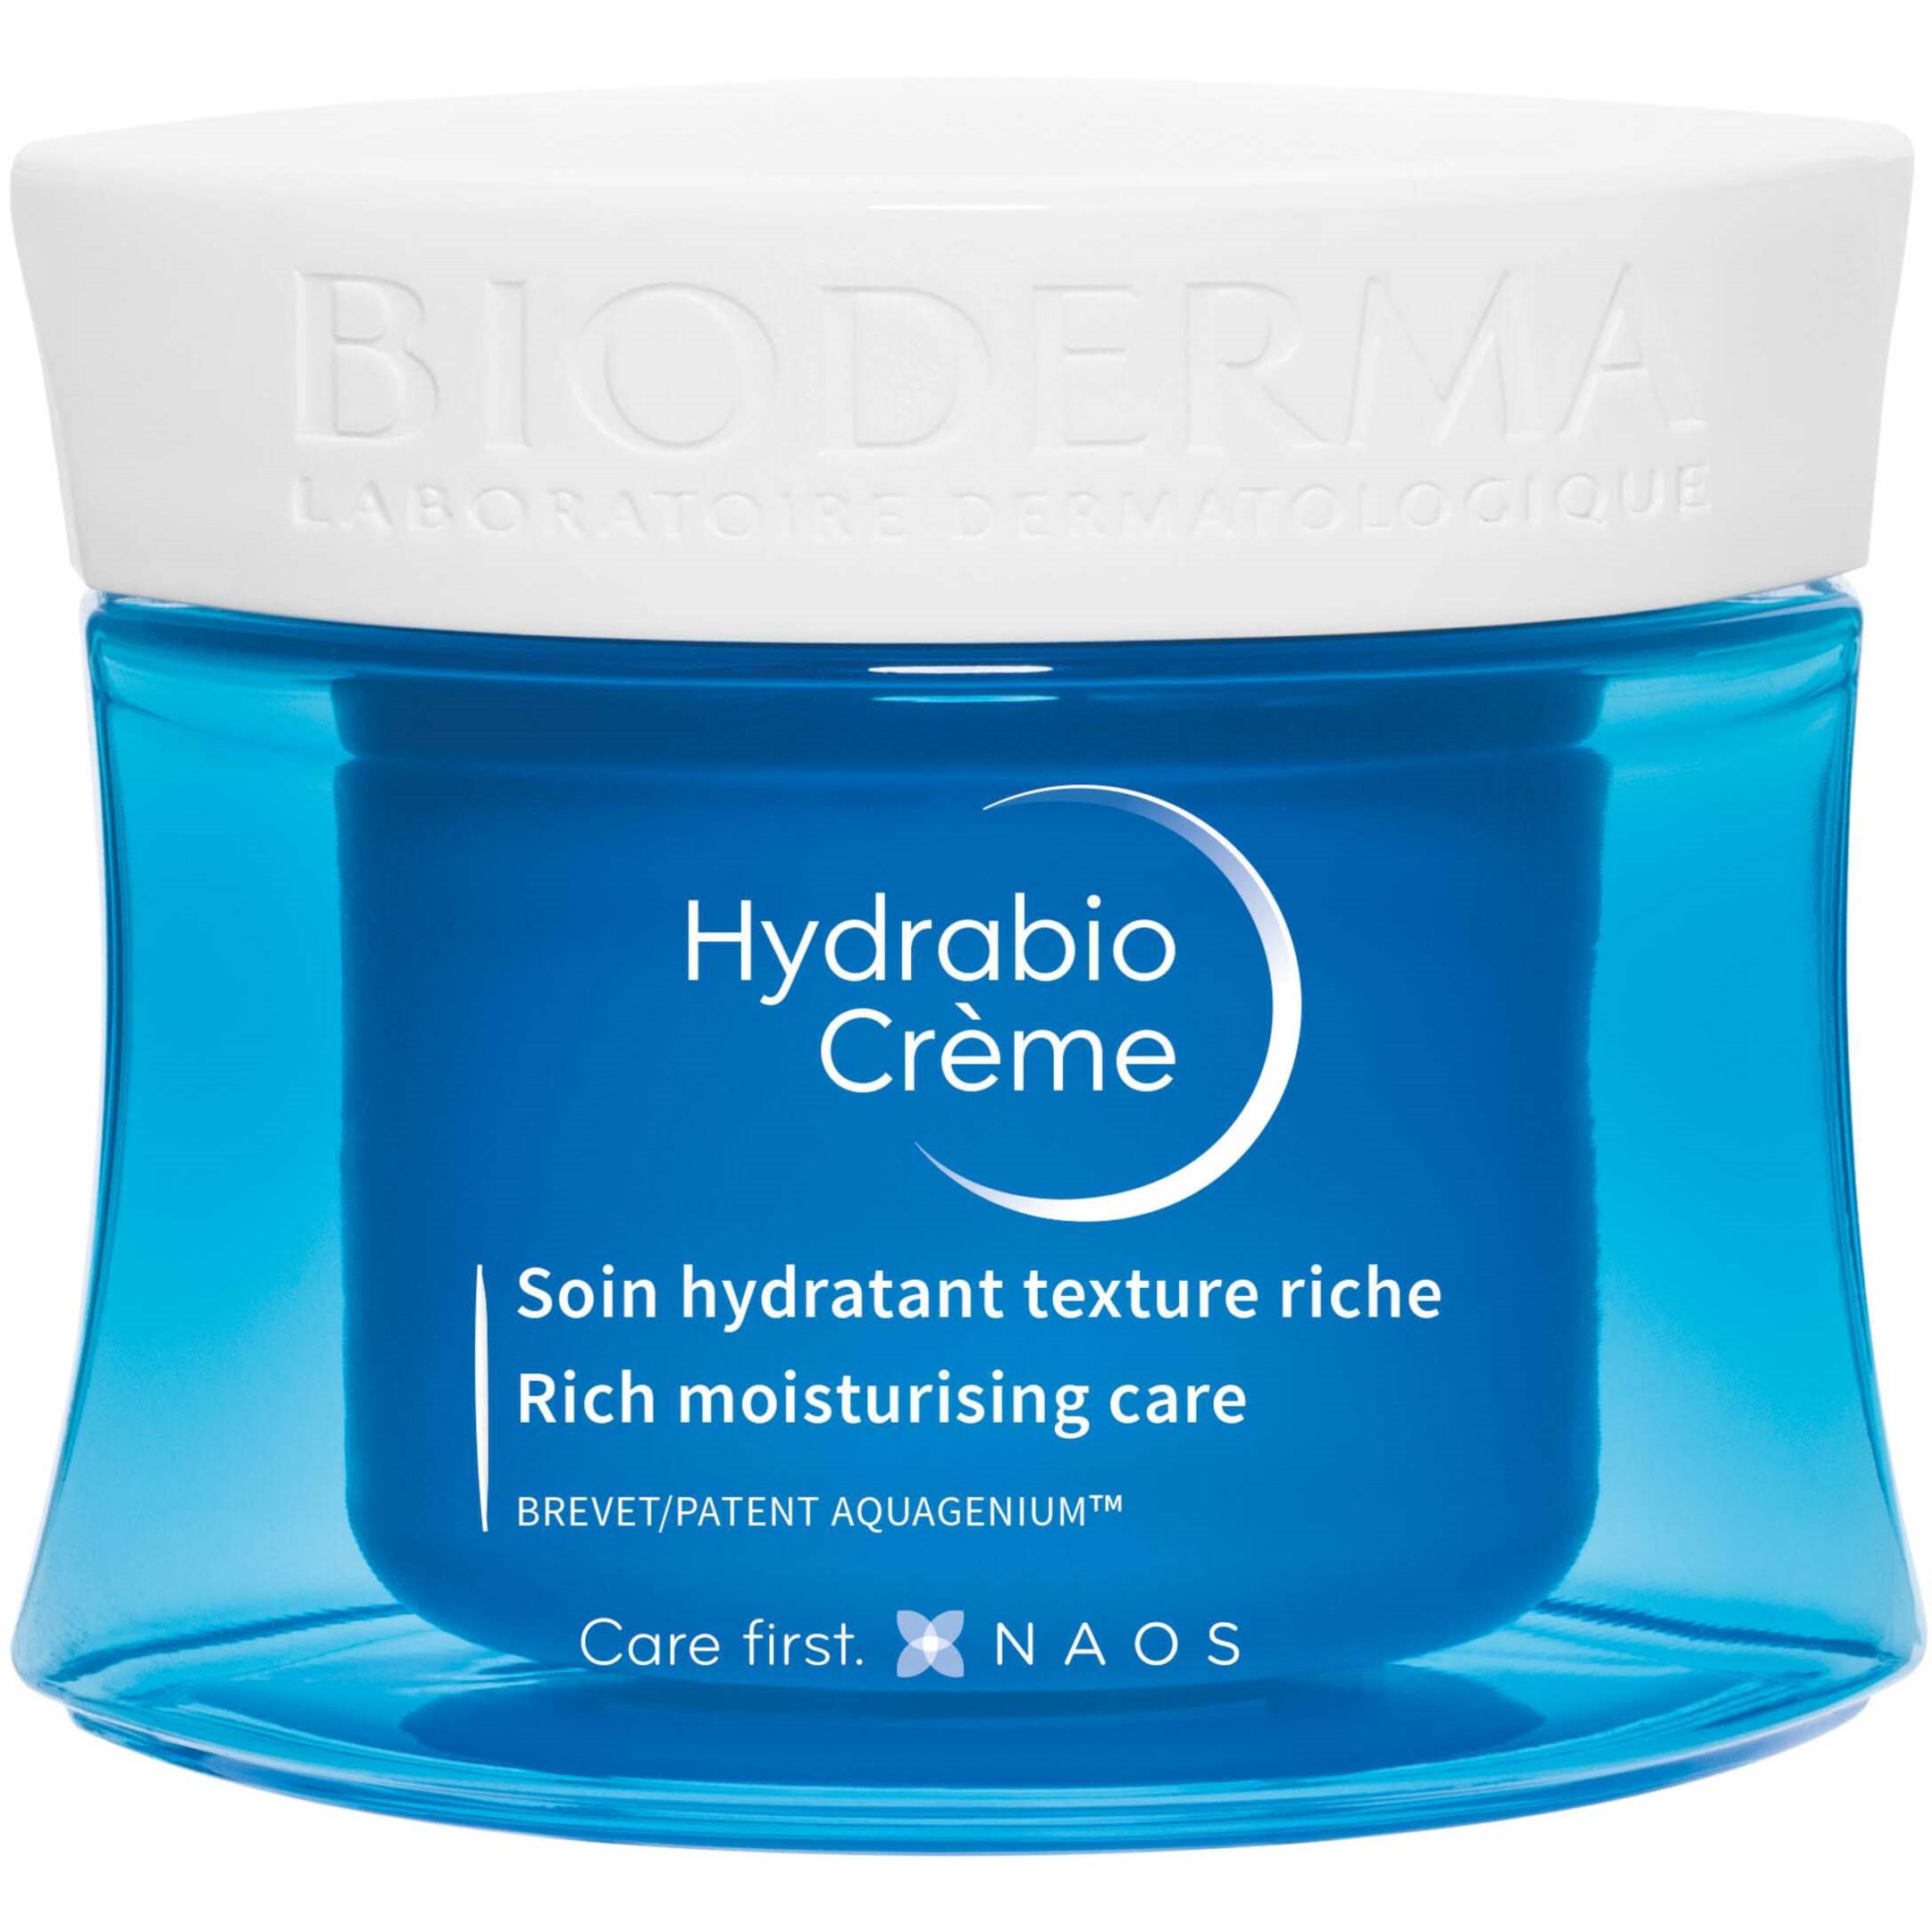 Bioderma Hydrabio Creme 50 ml